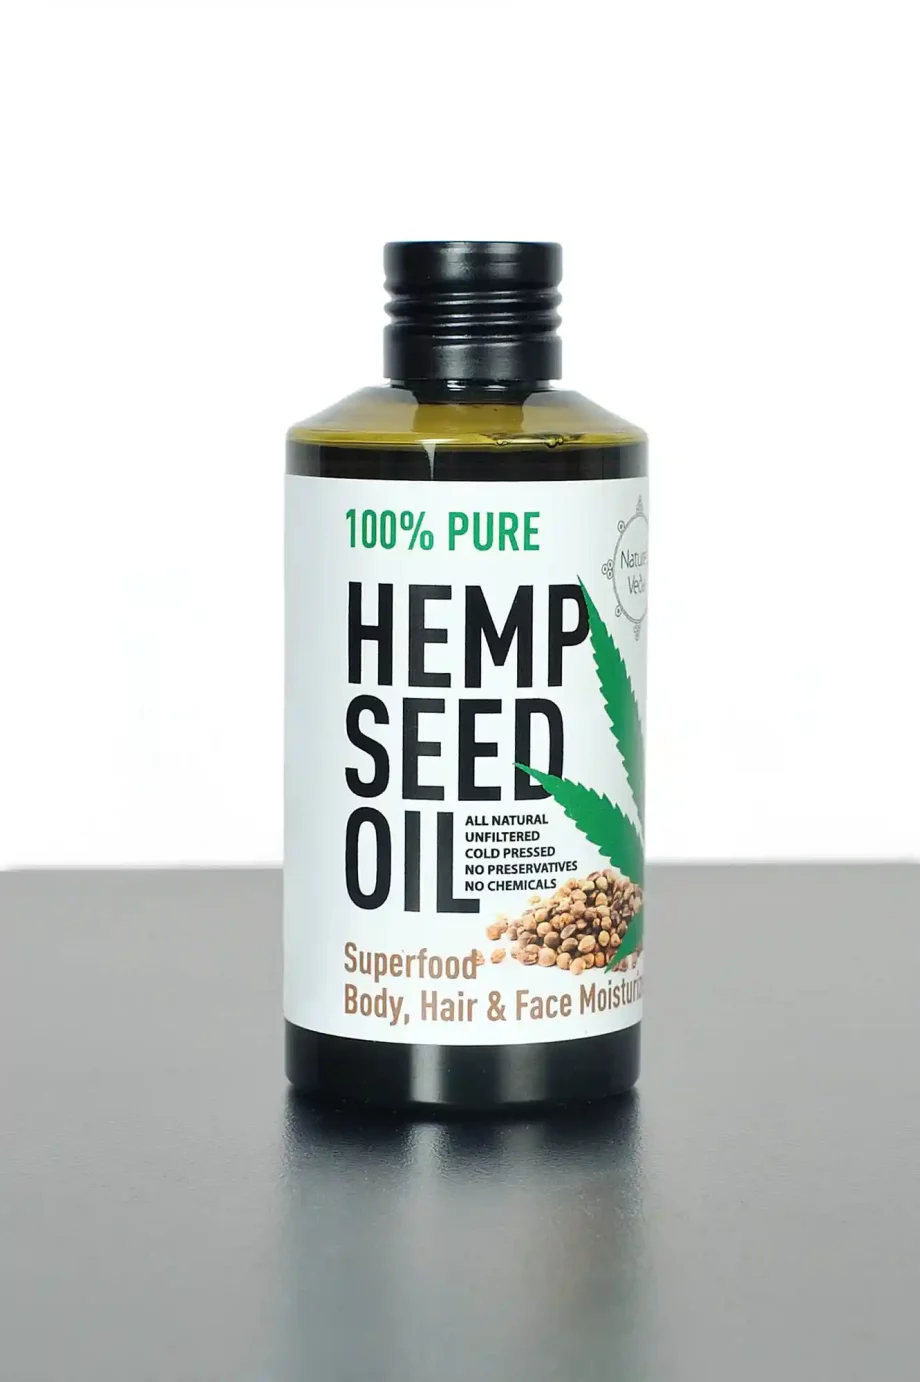 Nature's Veda Hemp Seed Oil 150ml on itsHemp